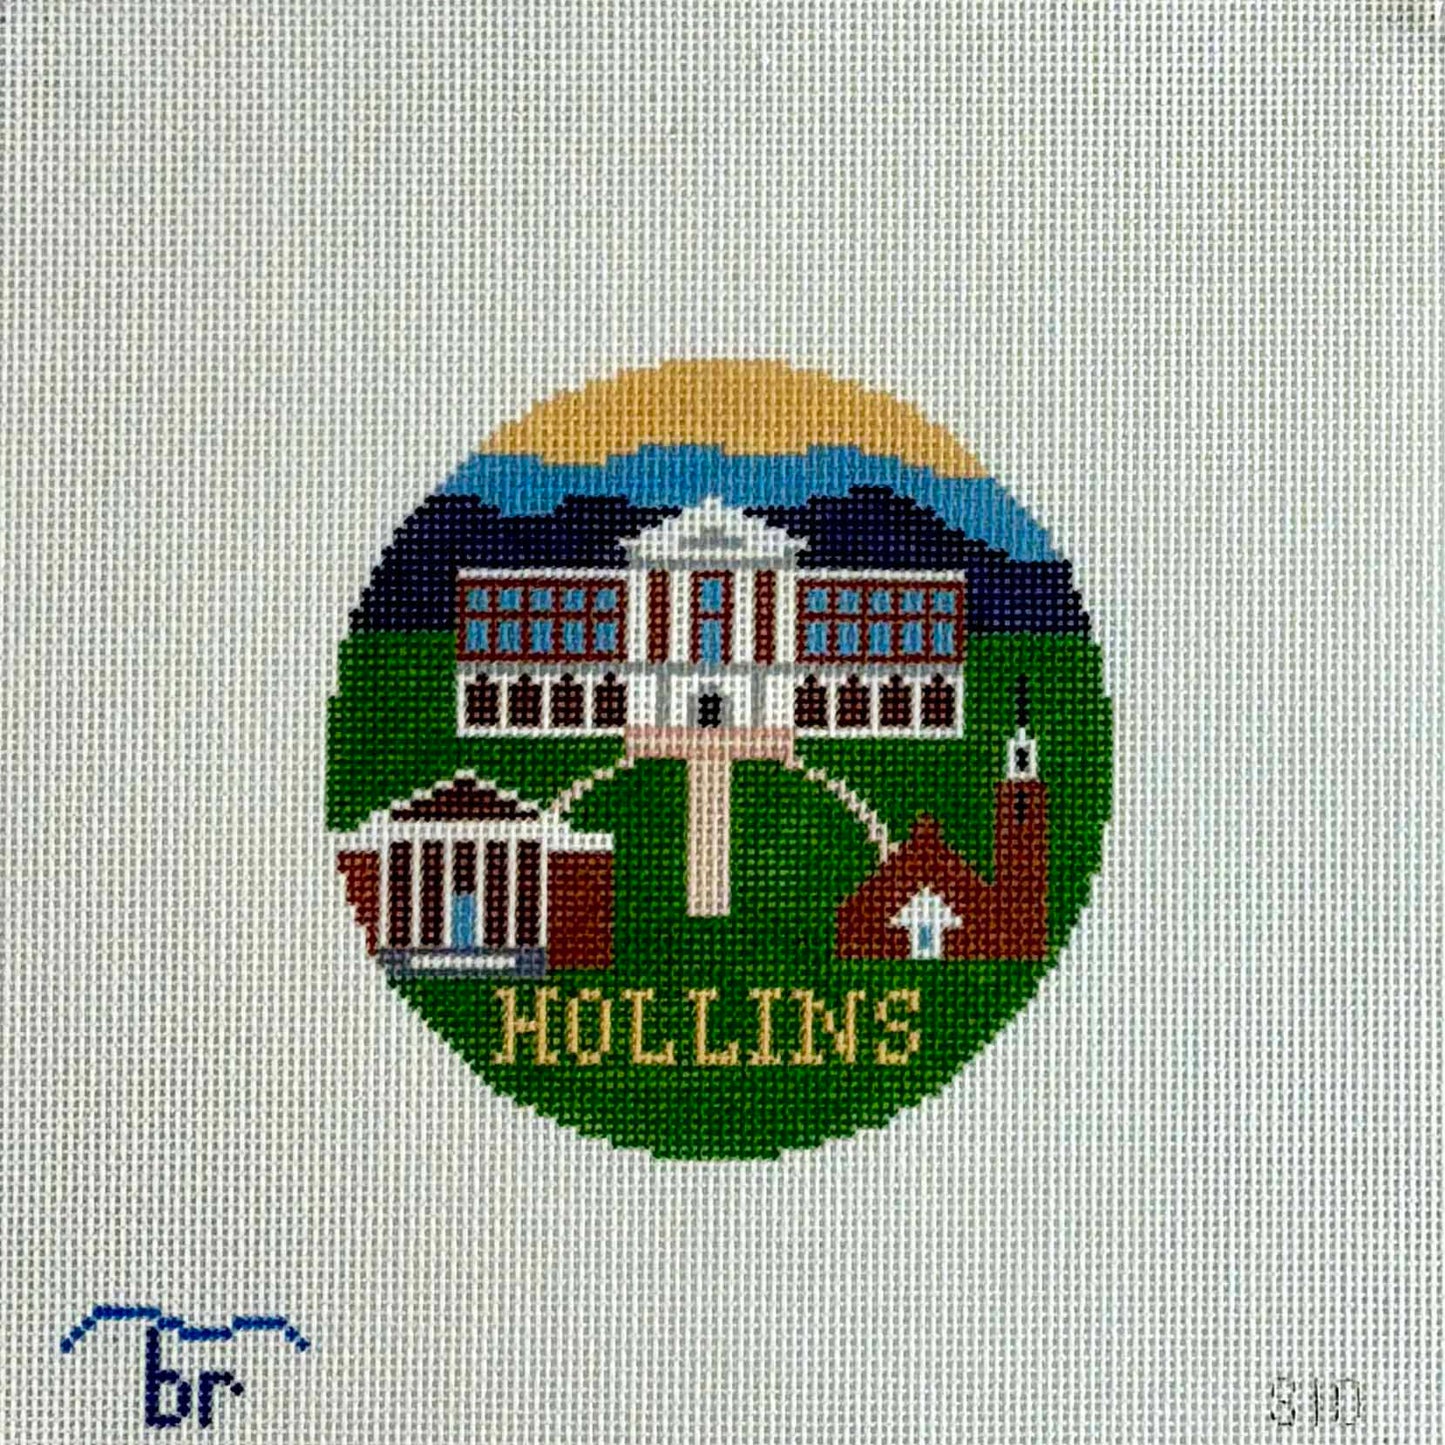 Hollins - Roanoke, Virginia